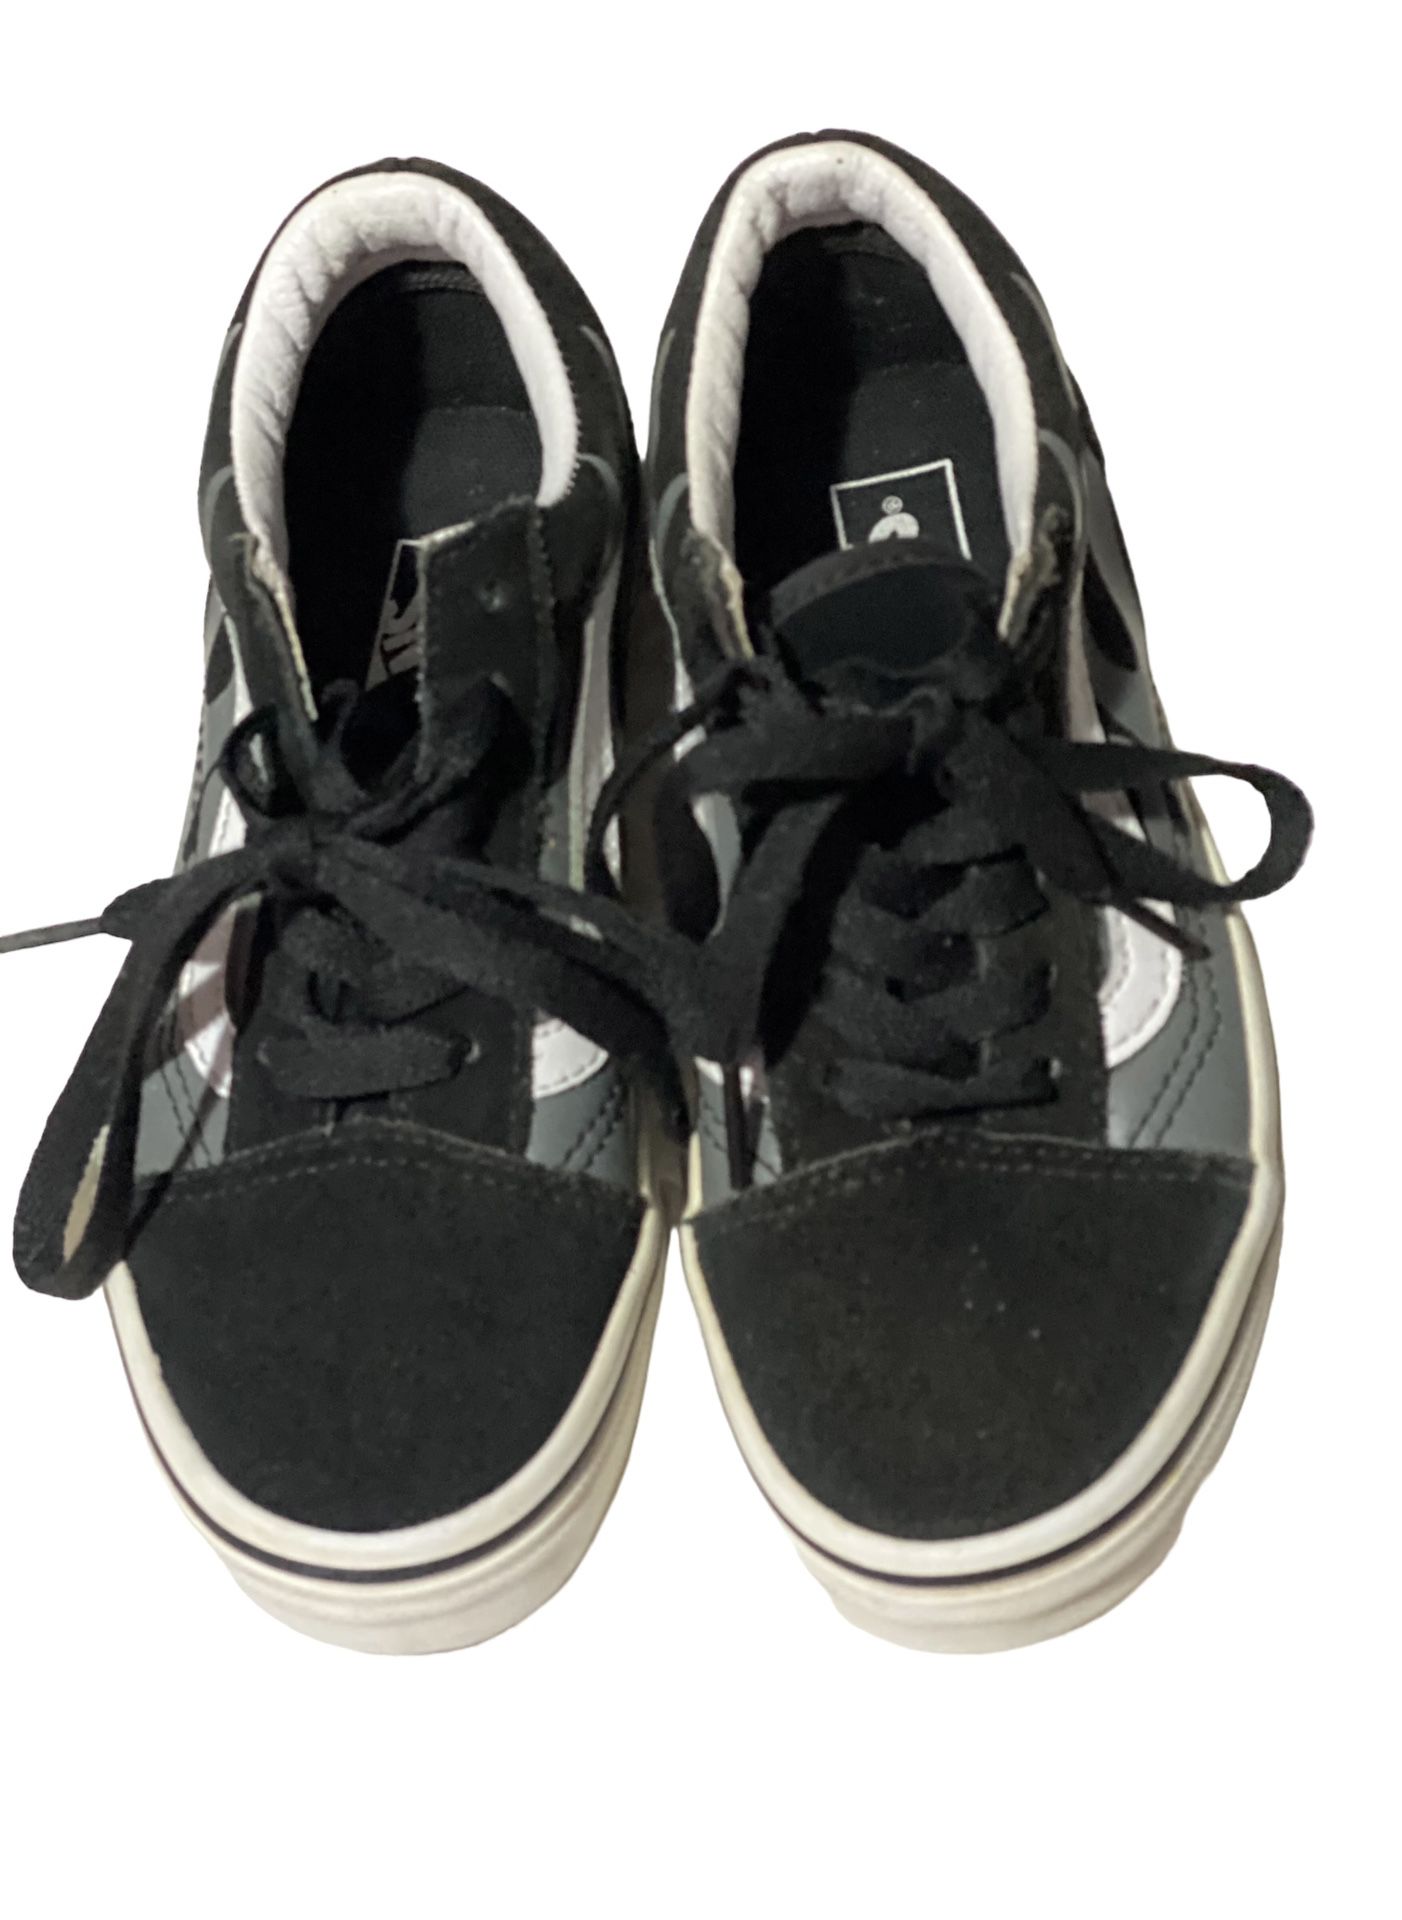 Vans Kids Size 1.5 Black/Gray Flames Skate Sneaker